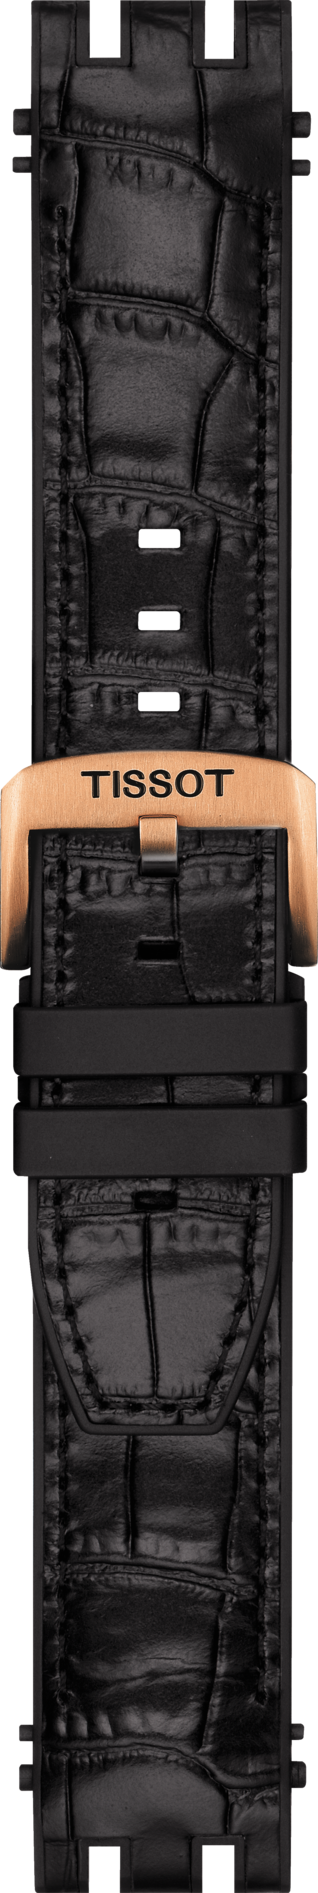 Tissot T-Race T115407 Black Rubber Watch Band Strap - WATCHBAND EXPERT